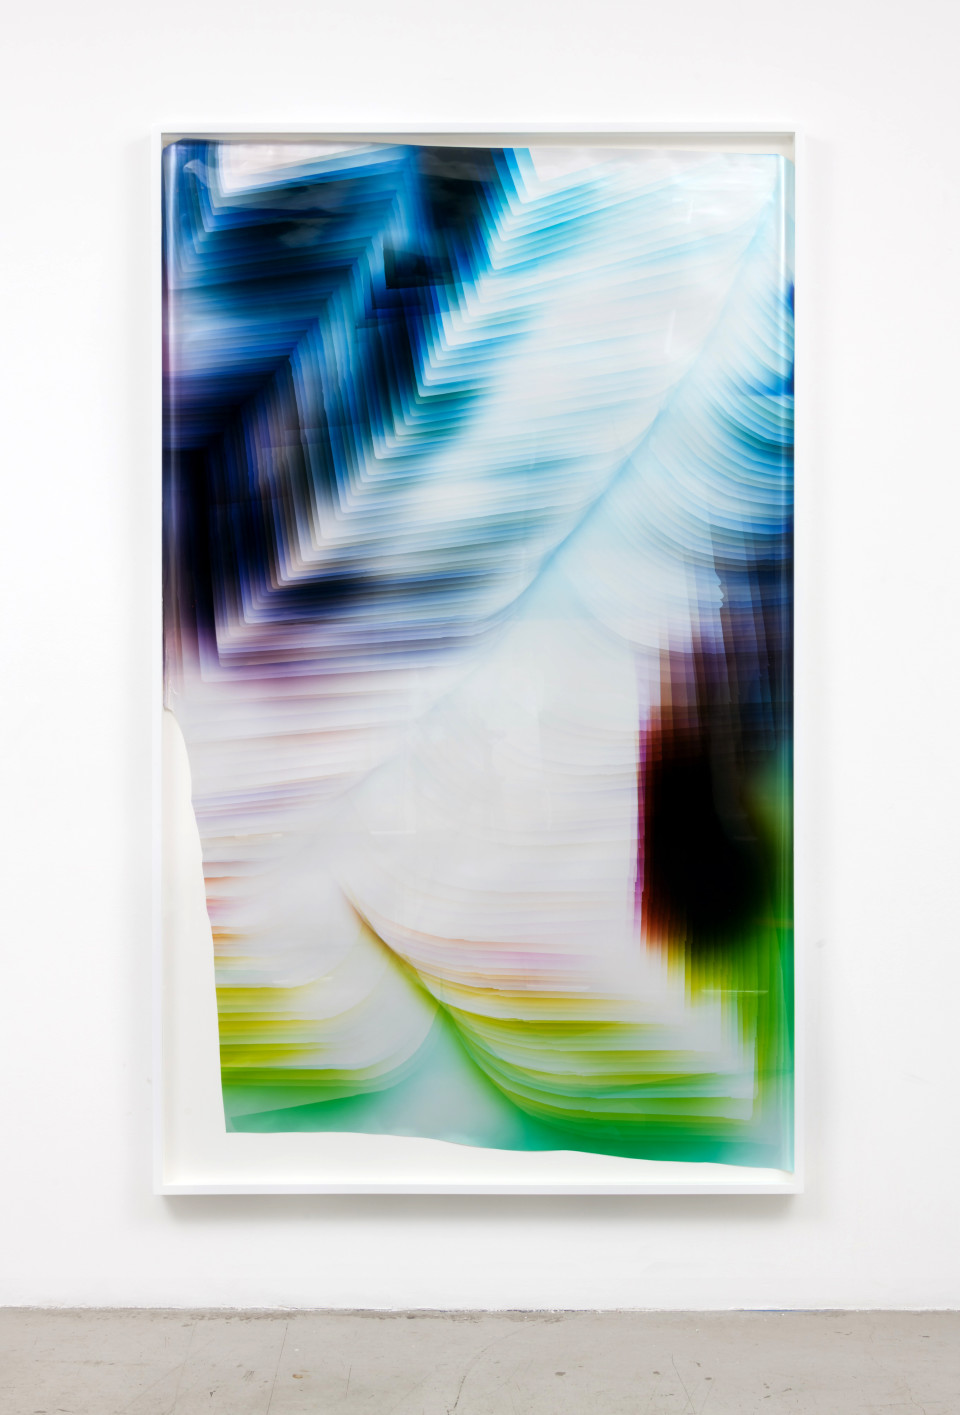 Image: Mariah Robertson  260, 2017  unique chromogenic print  82 x 50 inches (208.3 x 127 cm)